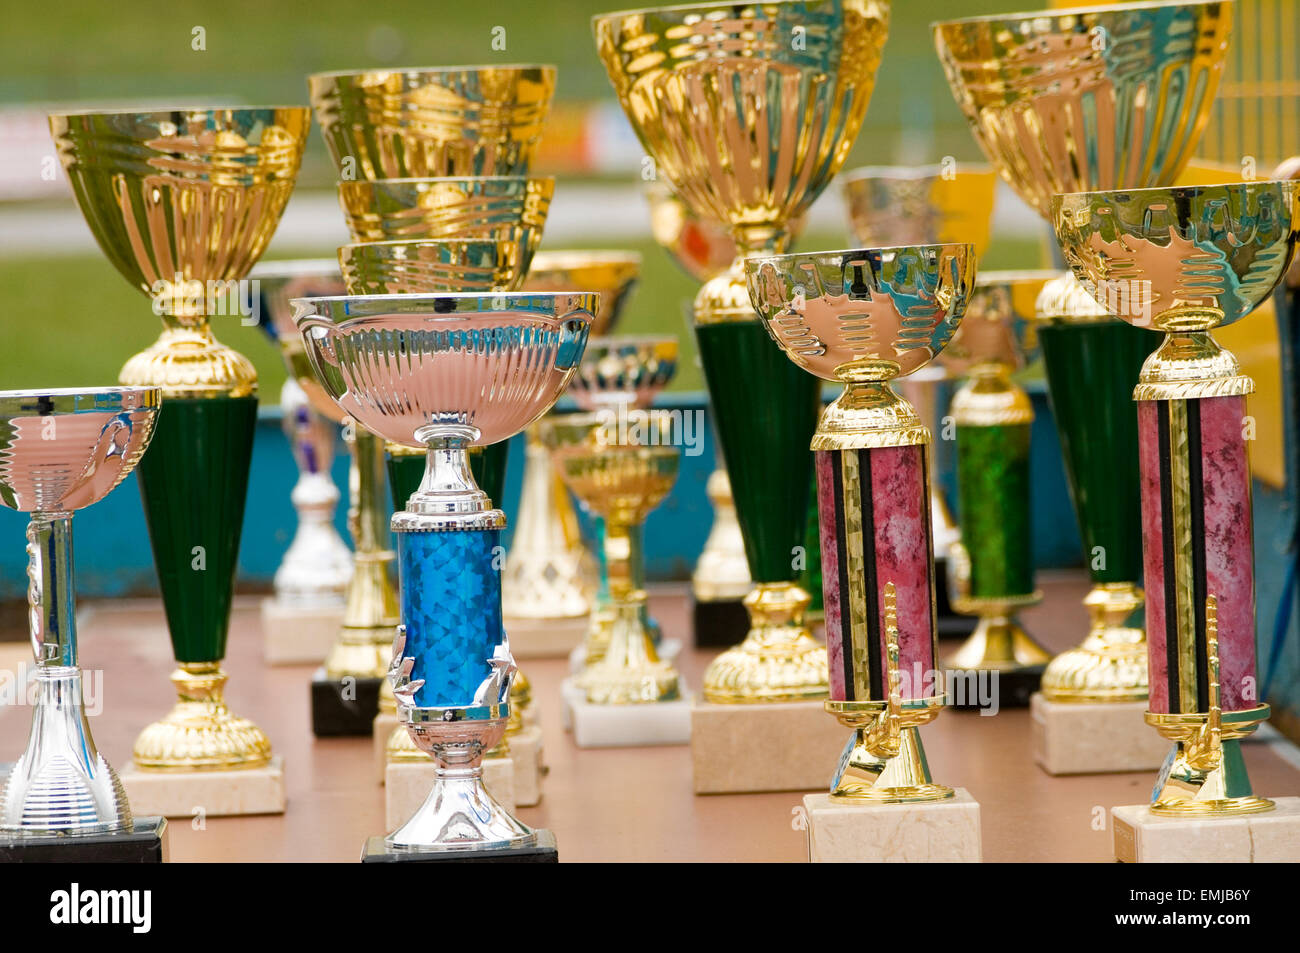 Trofeo trofeos plasticky taza tazas de plástico barato basura Fotografía de  stock - Alamy